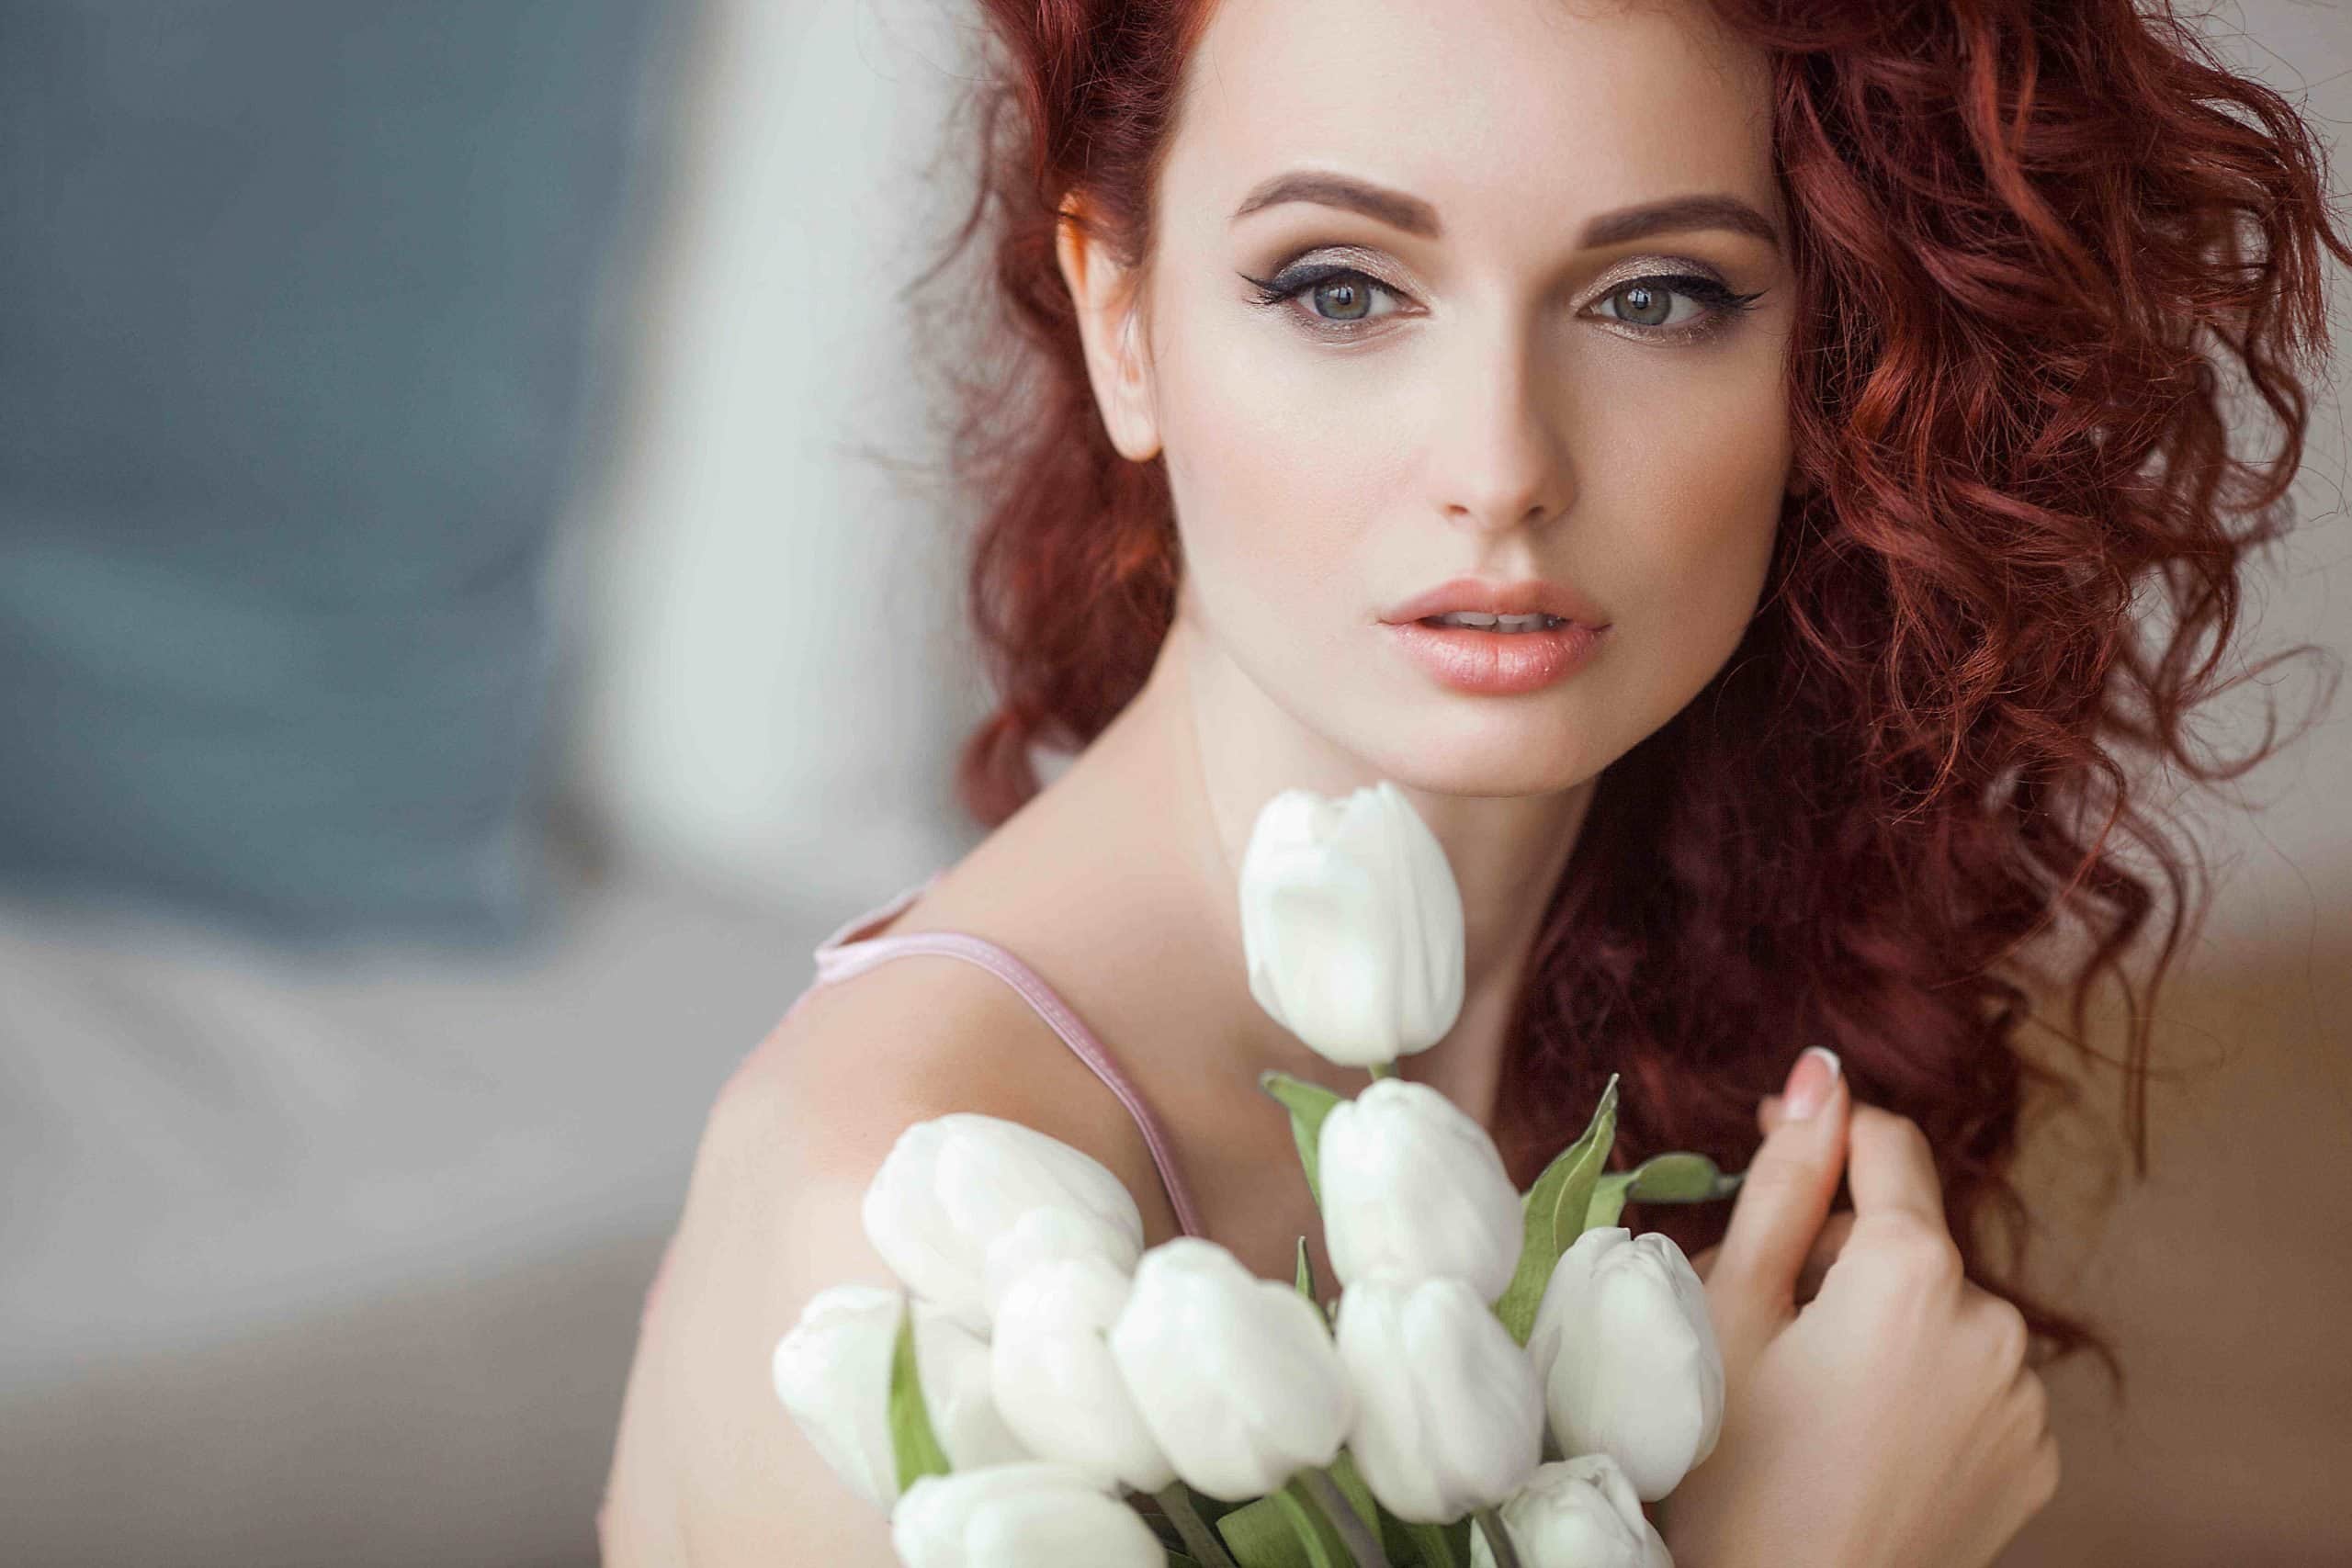 redhead-girl-flowers-image-image-scaled